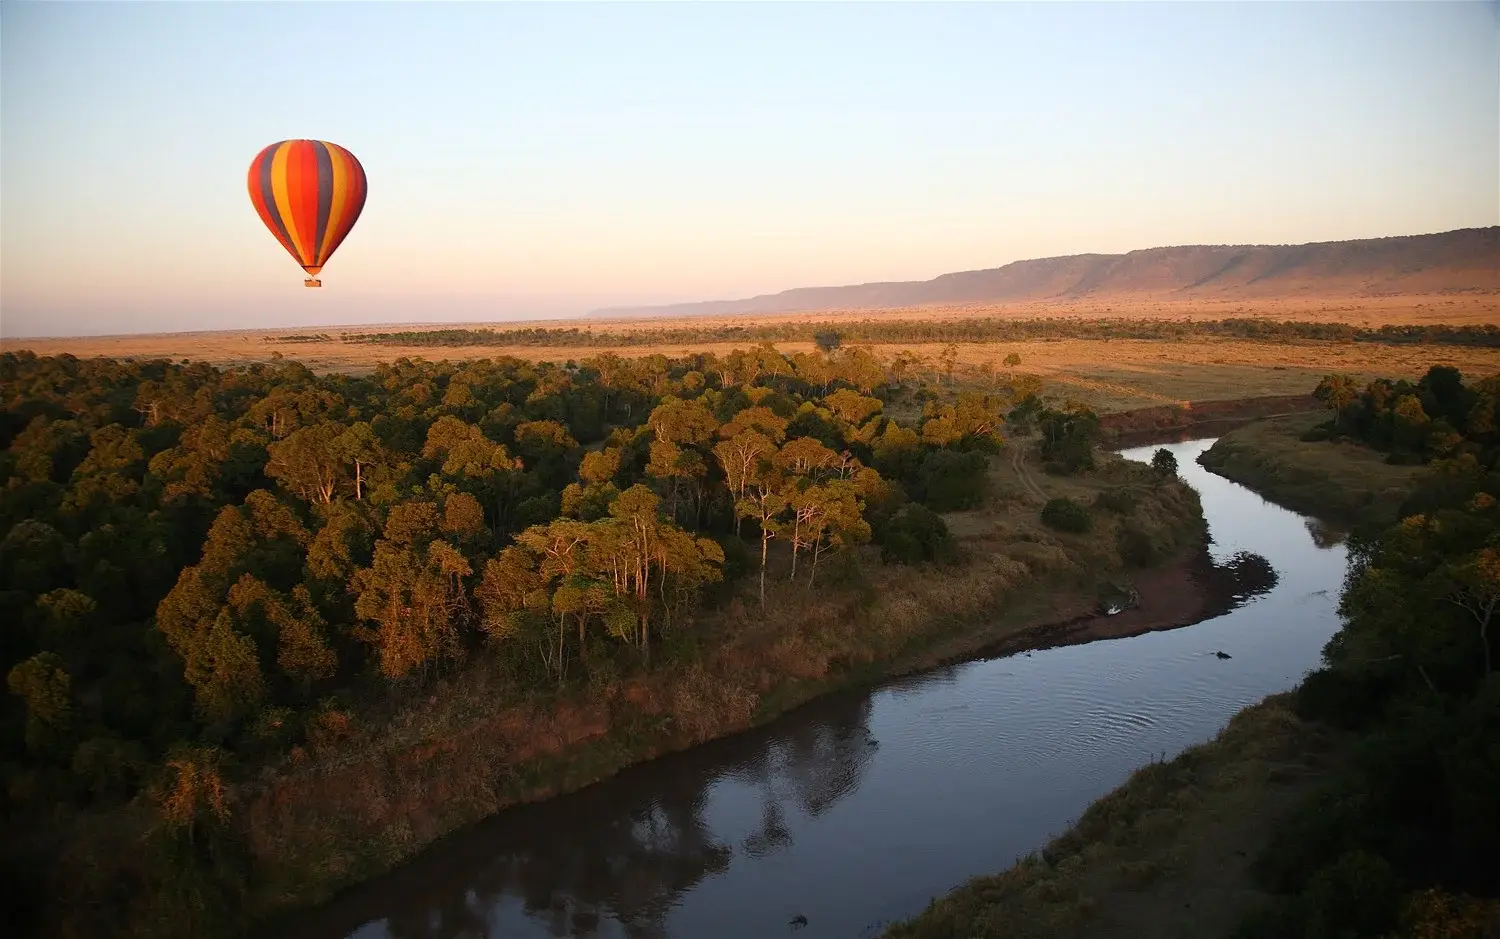 Kenya family holidays to the Masai Mara - a hot air balloon floating over the Mara